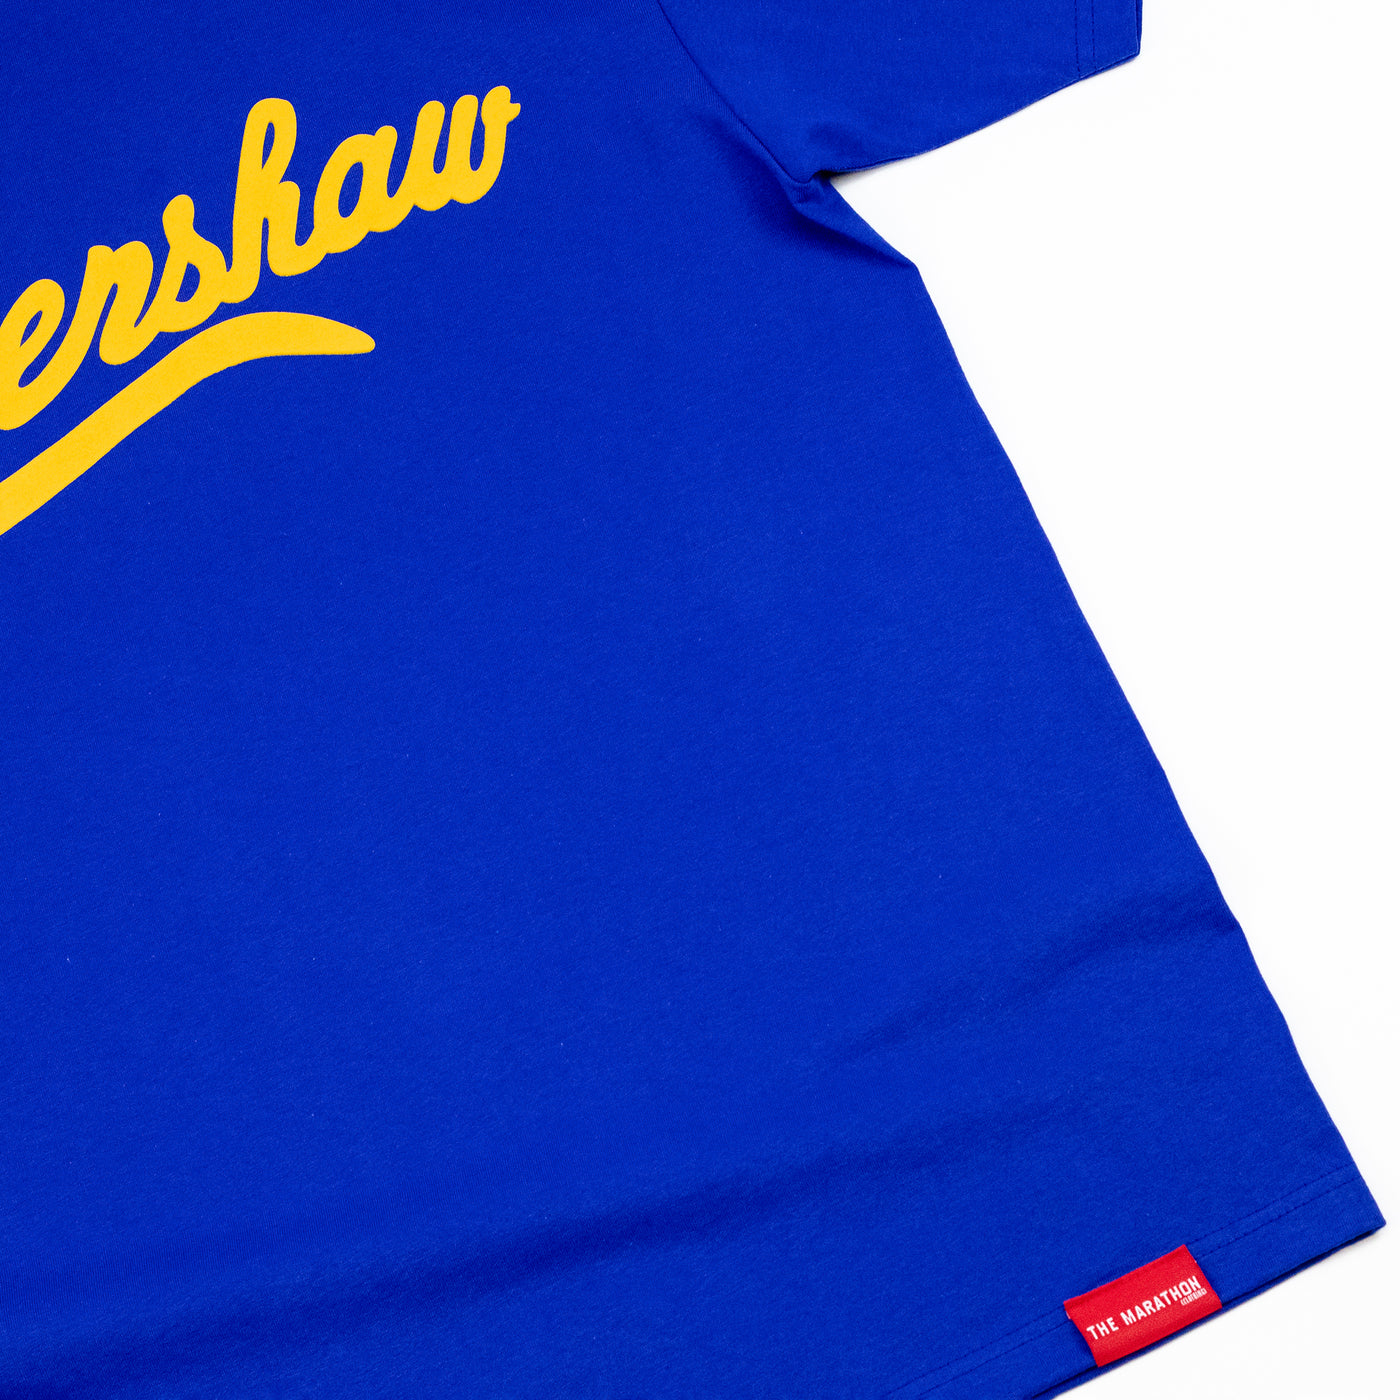 Limited Edition Crenshaw T-Shirt - Royal/Gold – The Marathon Clothing